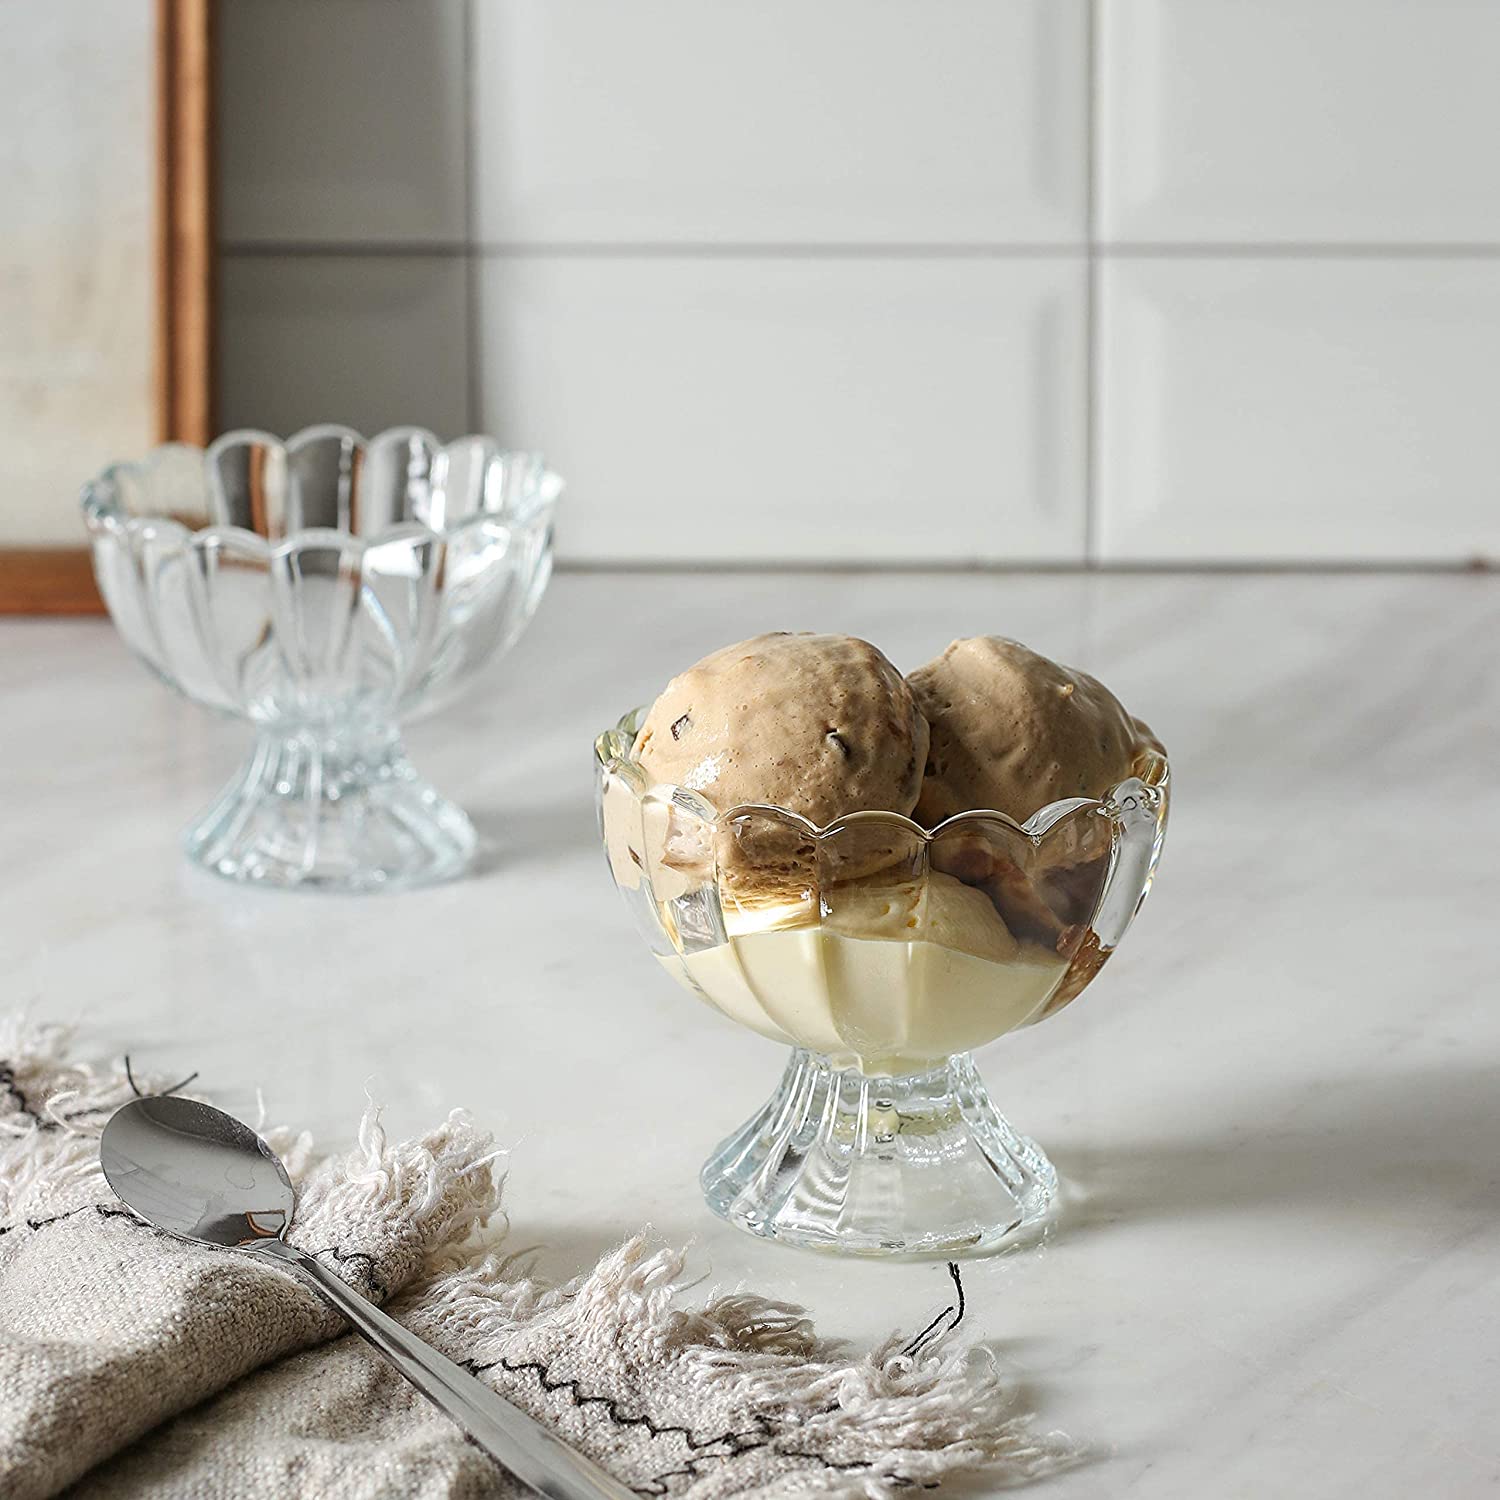 Cute Clear Glass Dessert Bowls Glass Ice Cream Bowl para sa ice cream at at prutas03